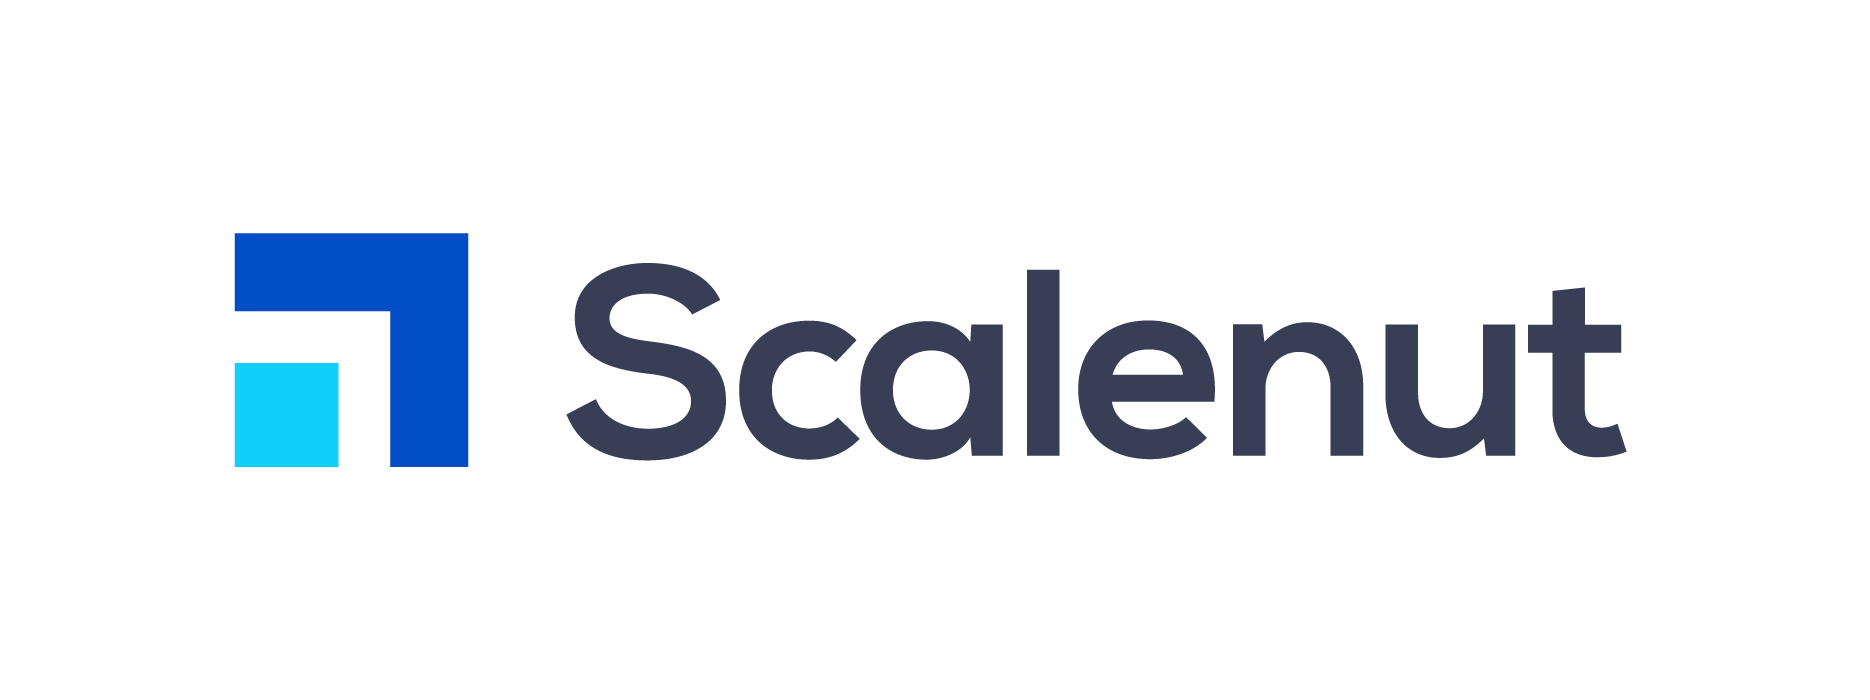 scalenut ai-writer and content platform